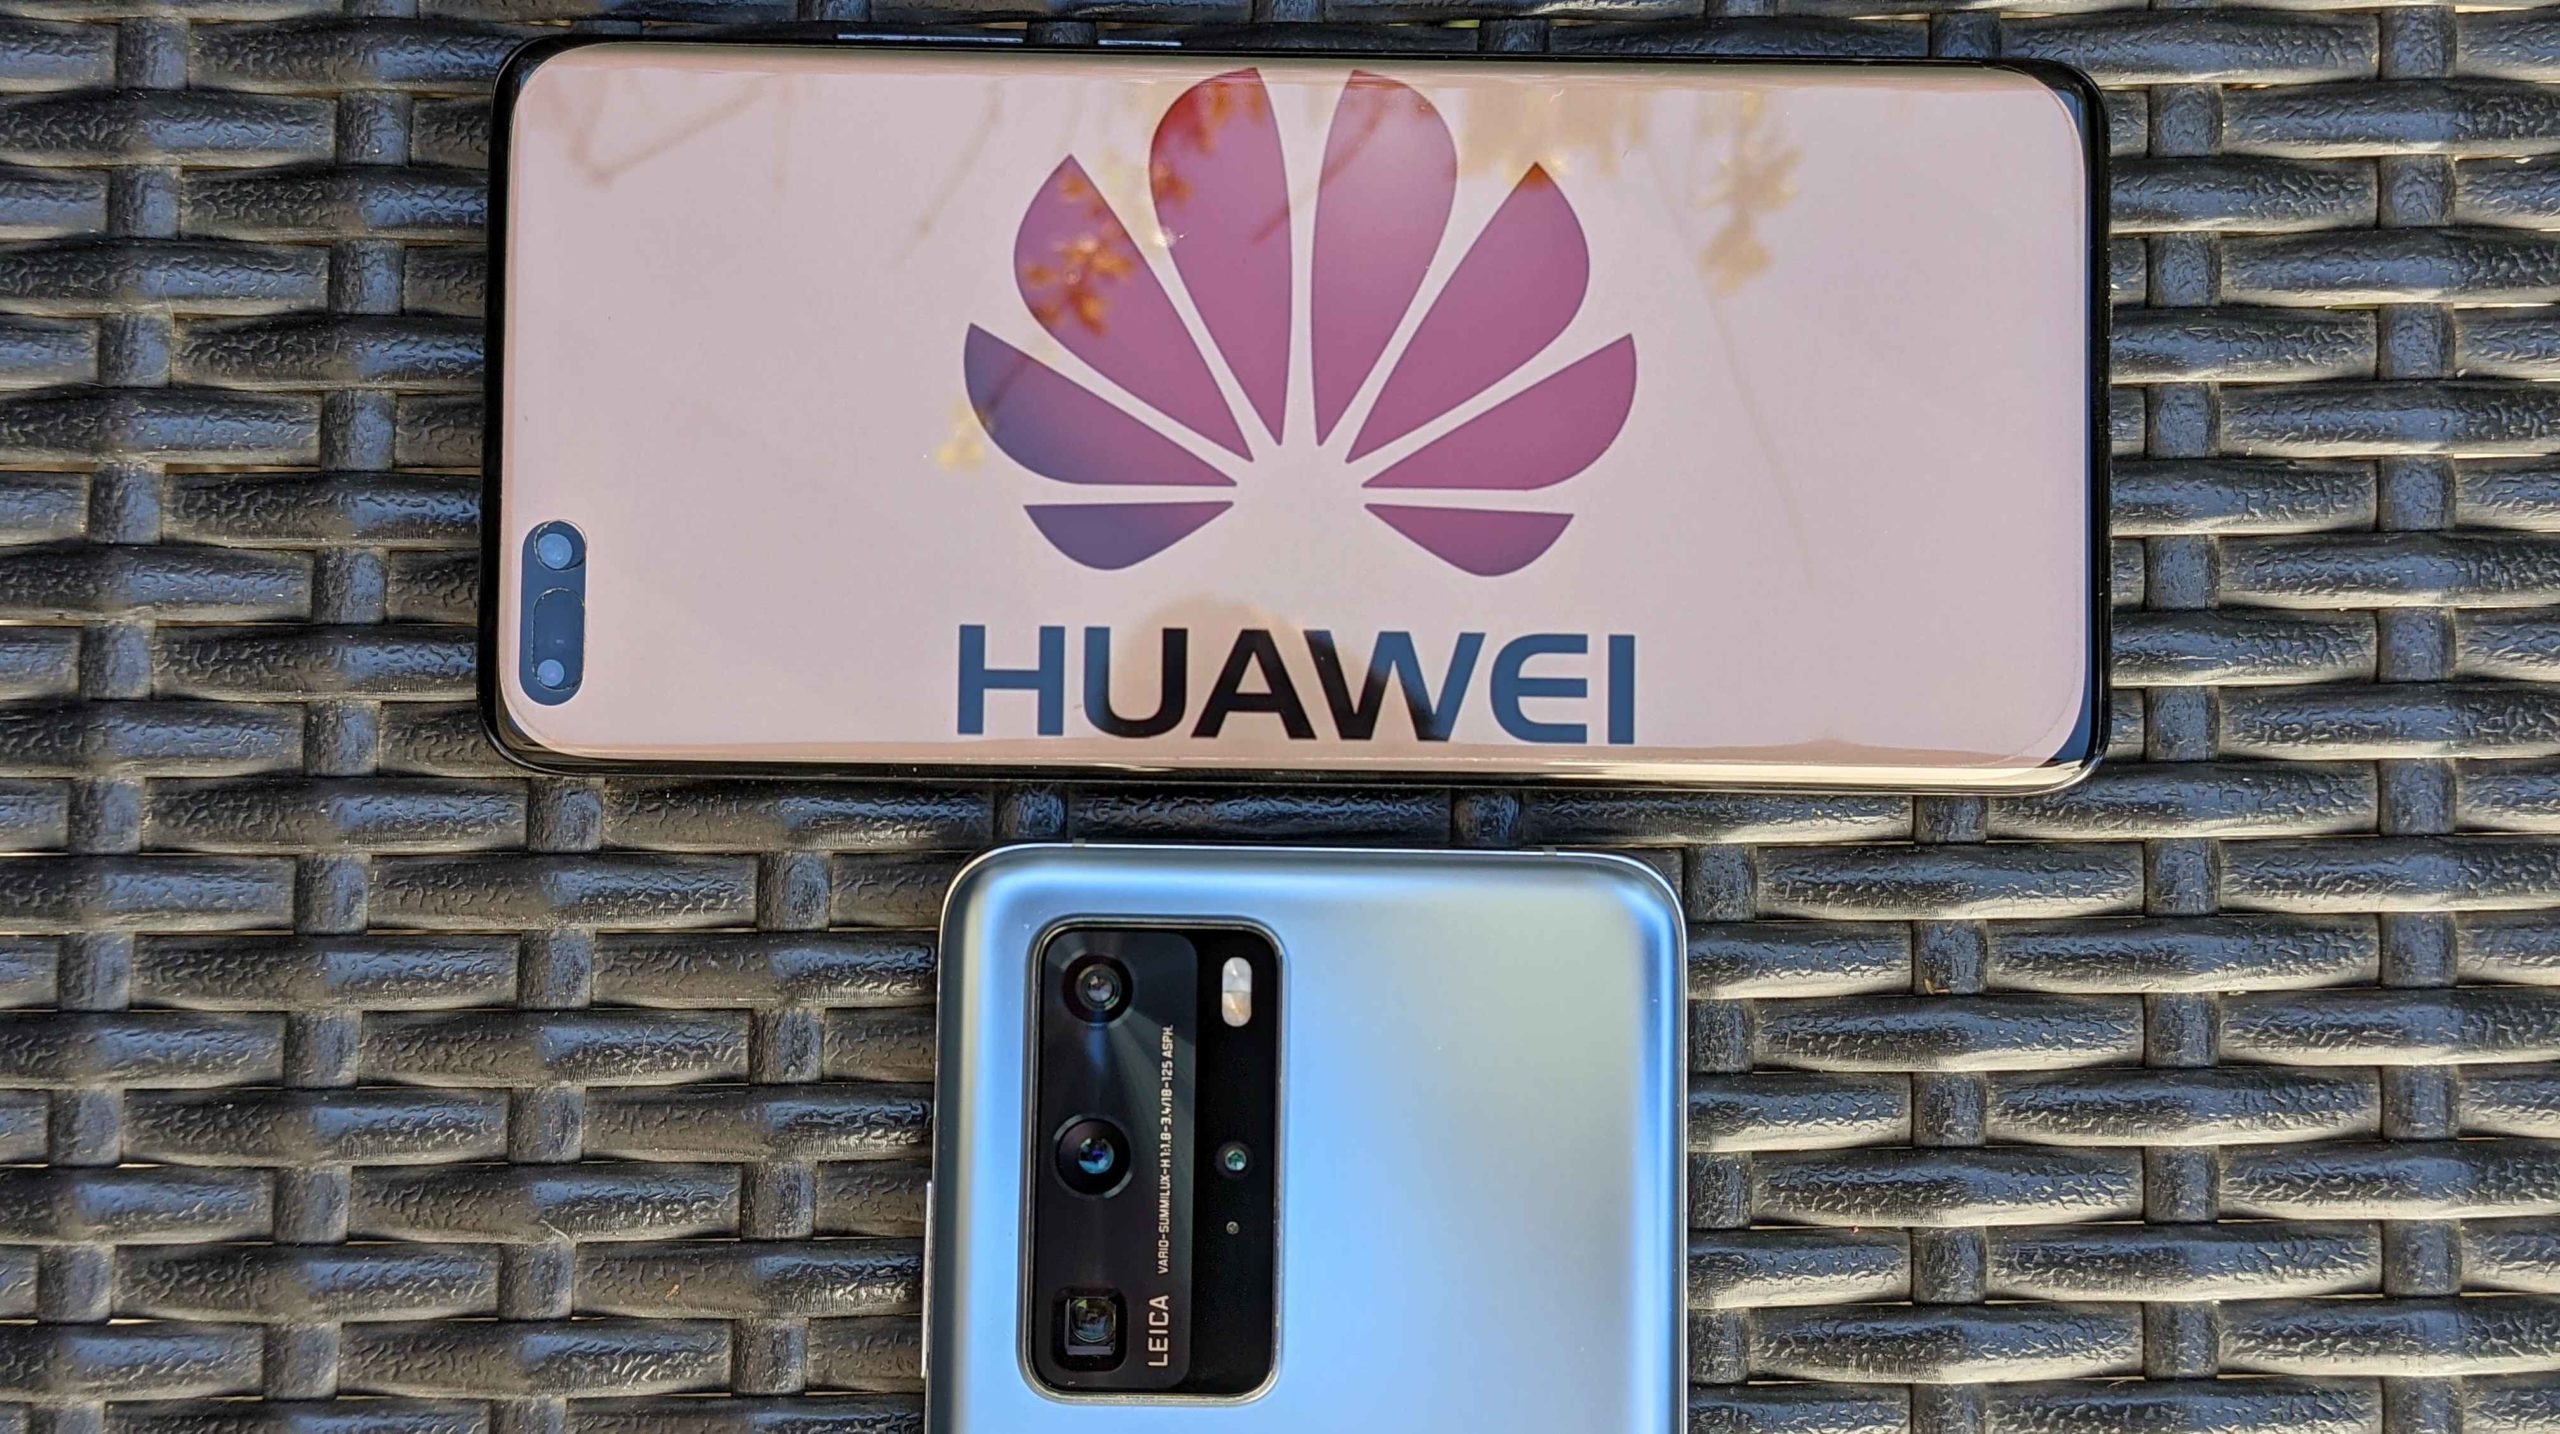 Huawei smartphones will receive HarmonyOS update before June